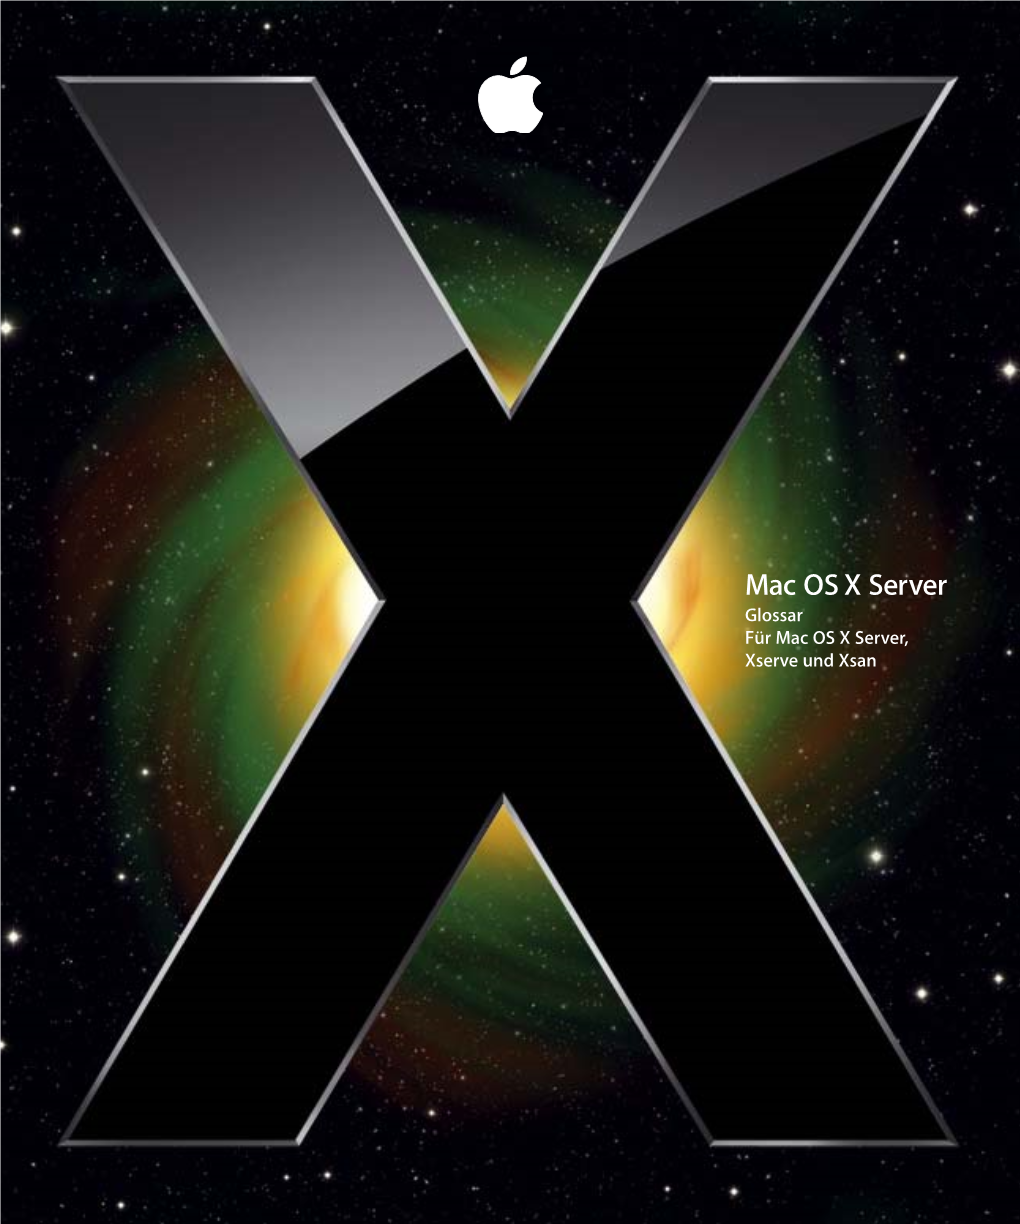 Mac OS X Server Glossar Für Mac OS X Server, Xserve Und Xsan K Apple Inc